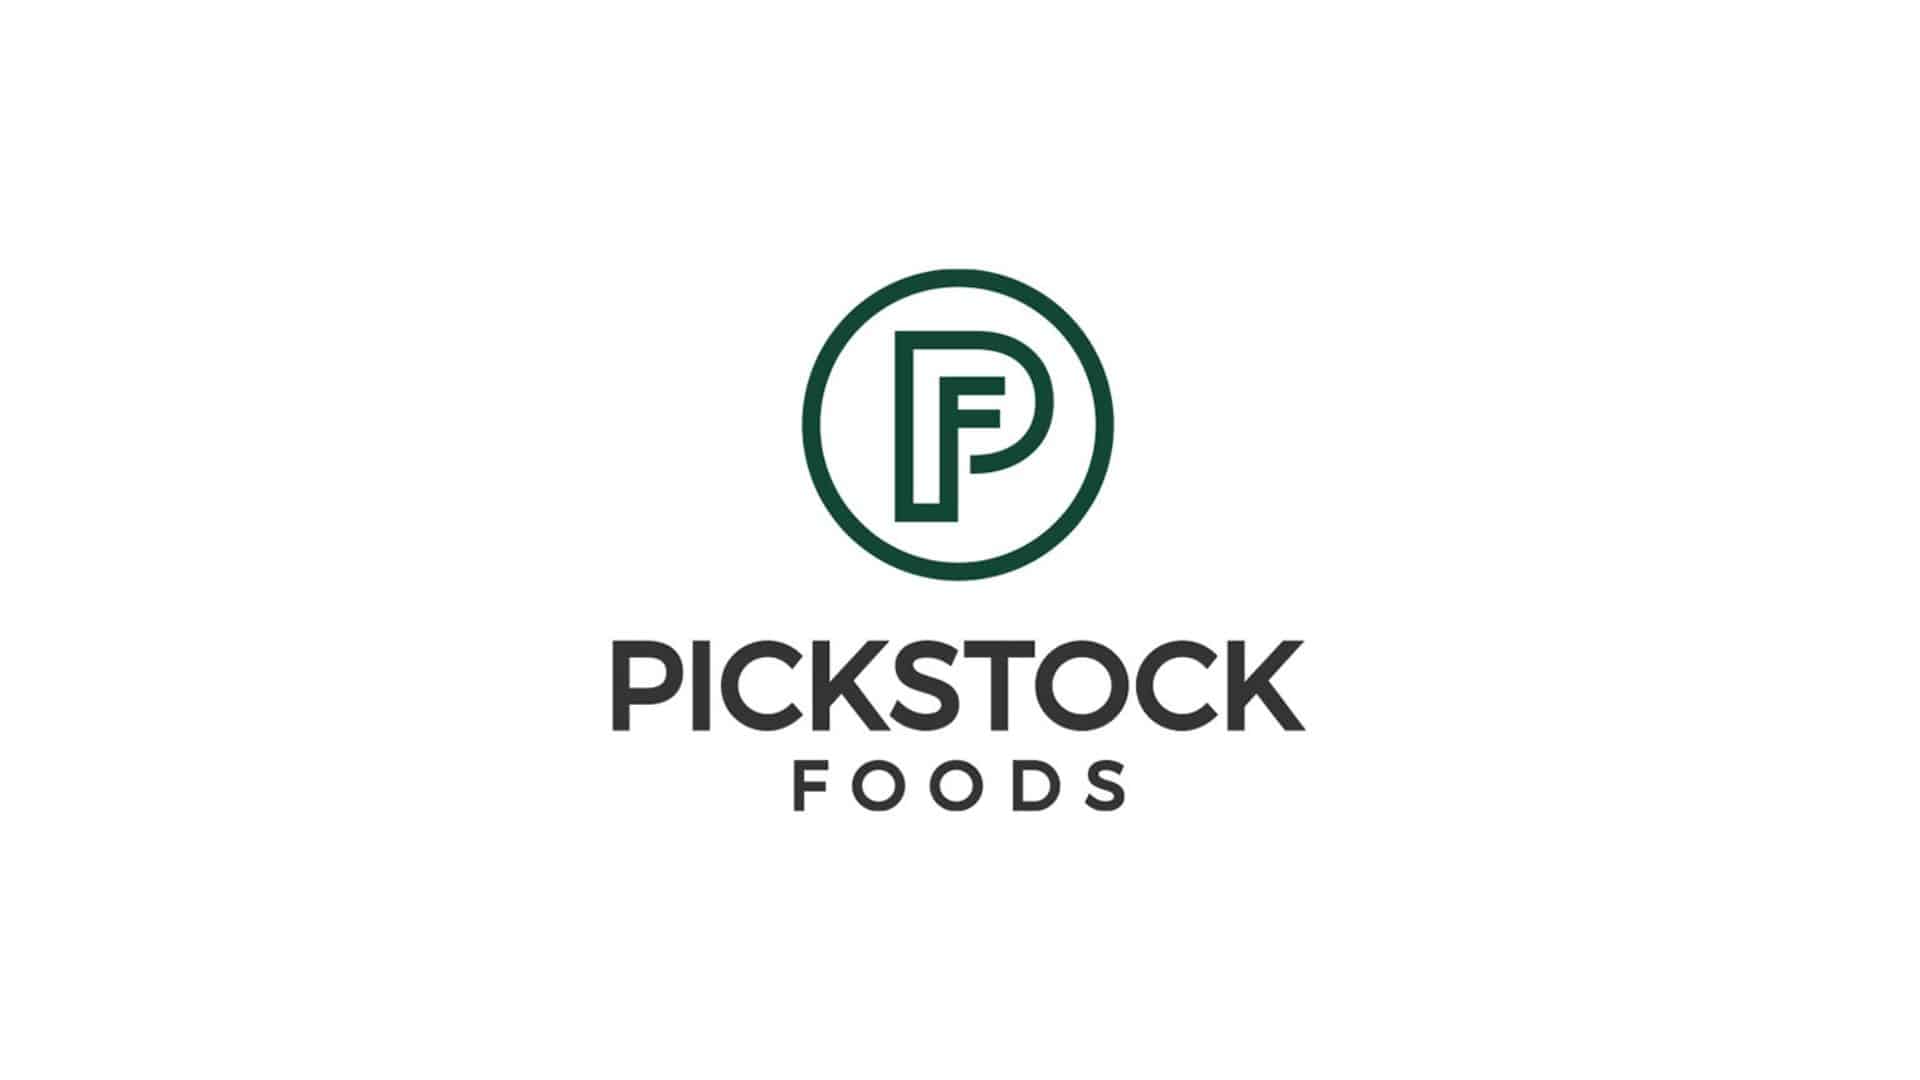 Pickstock Foods